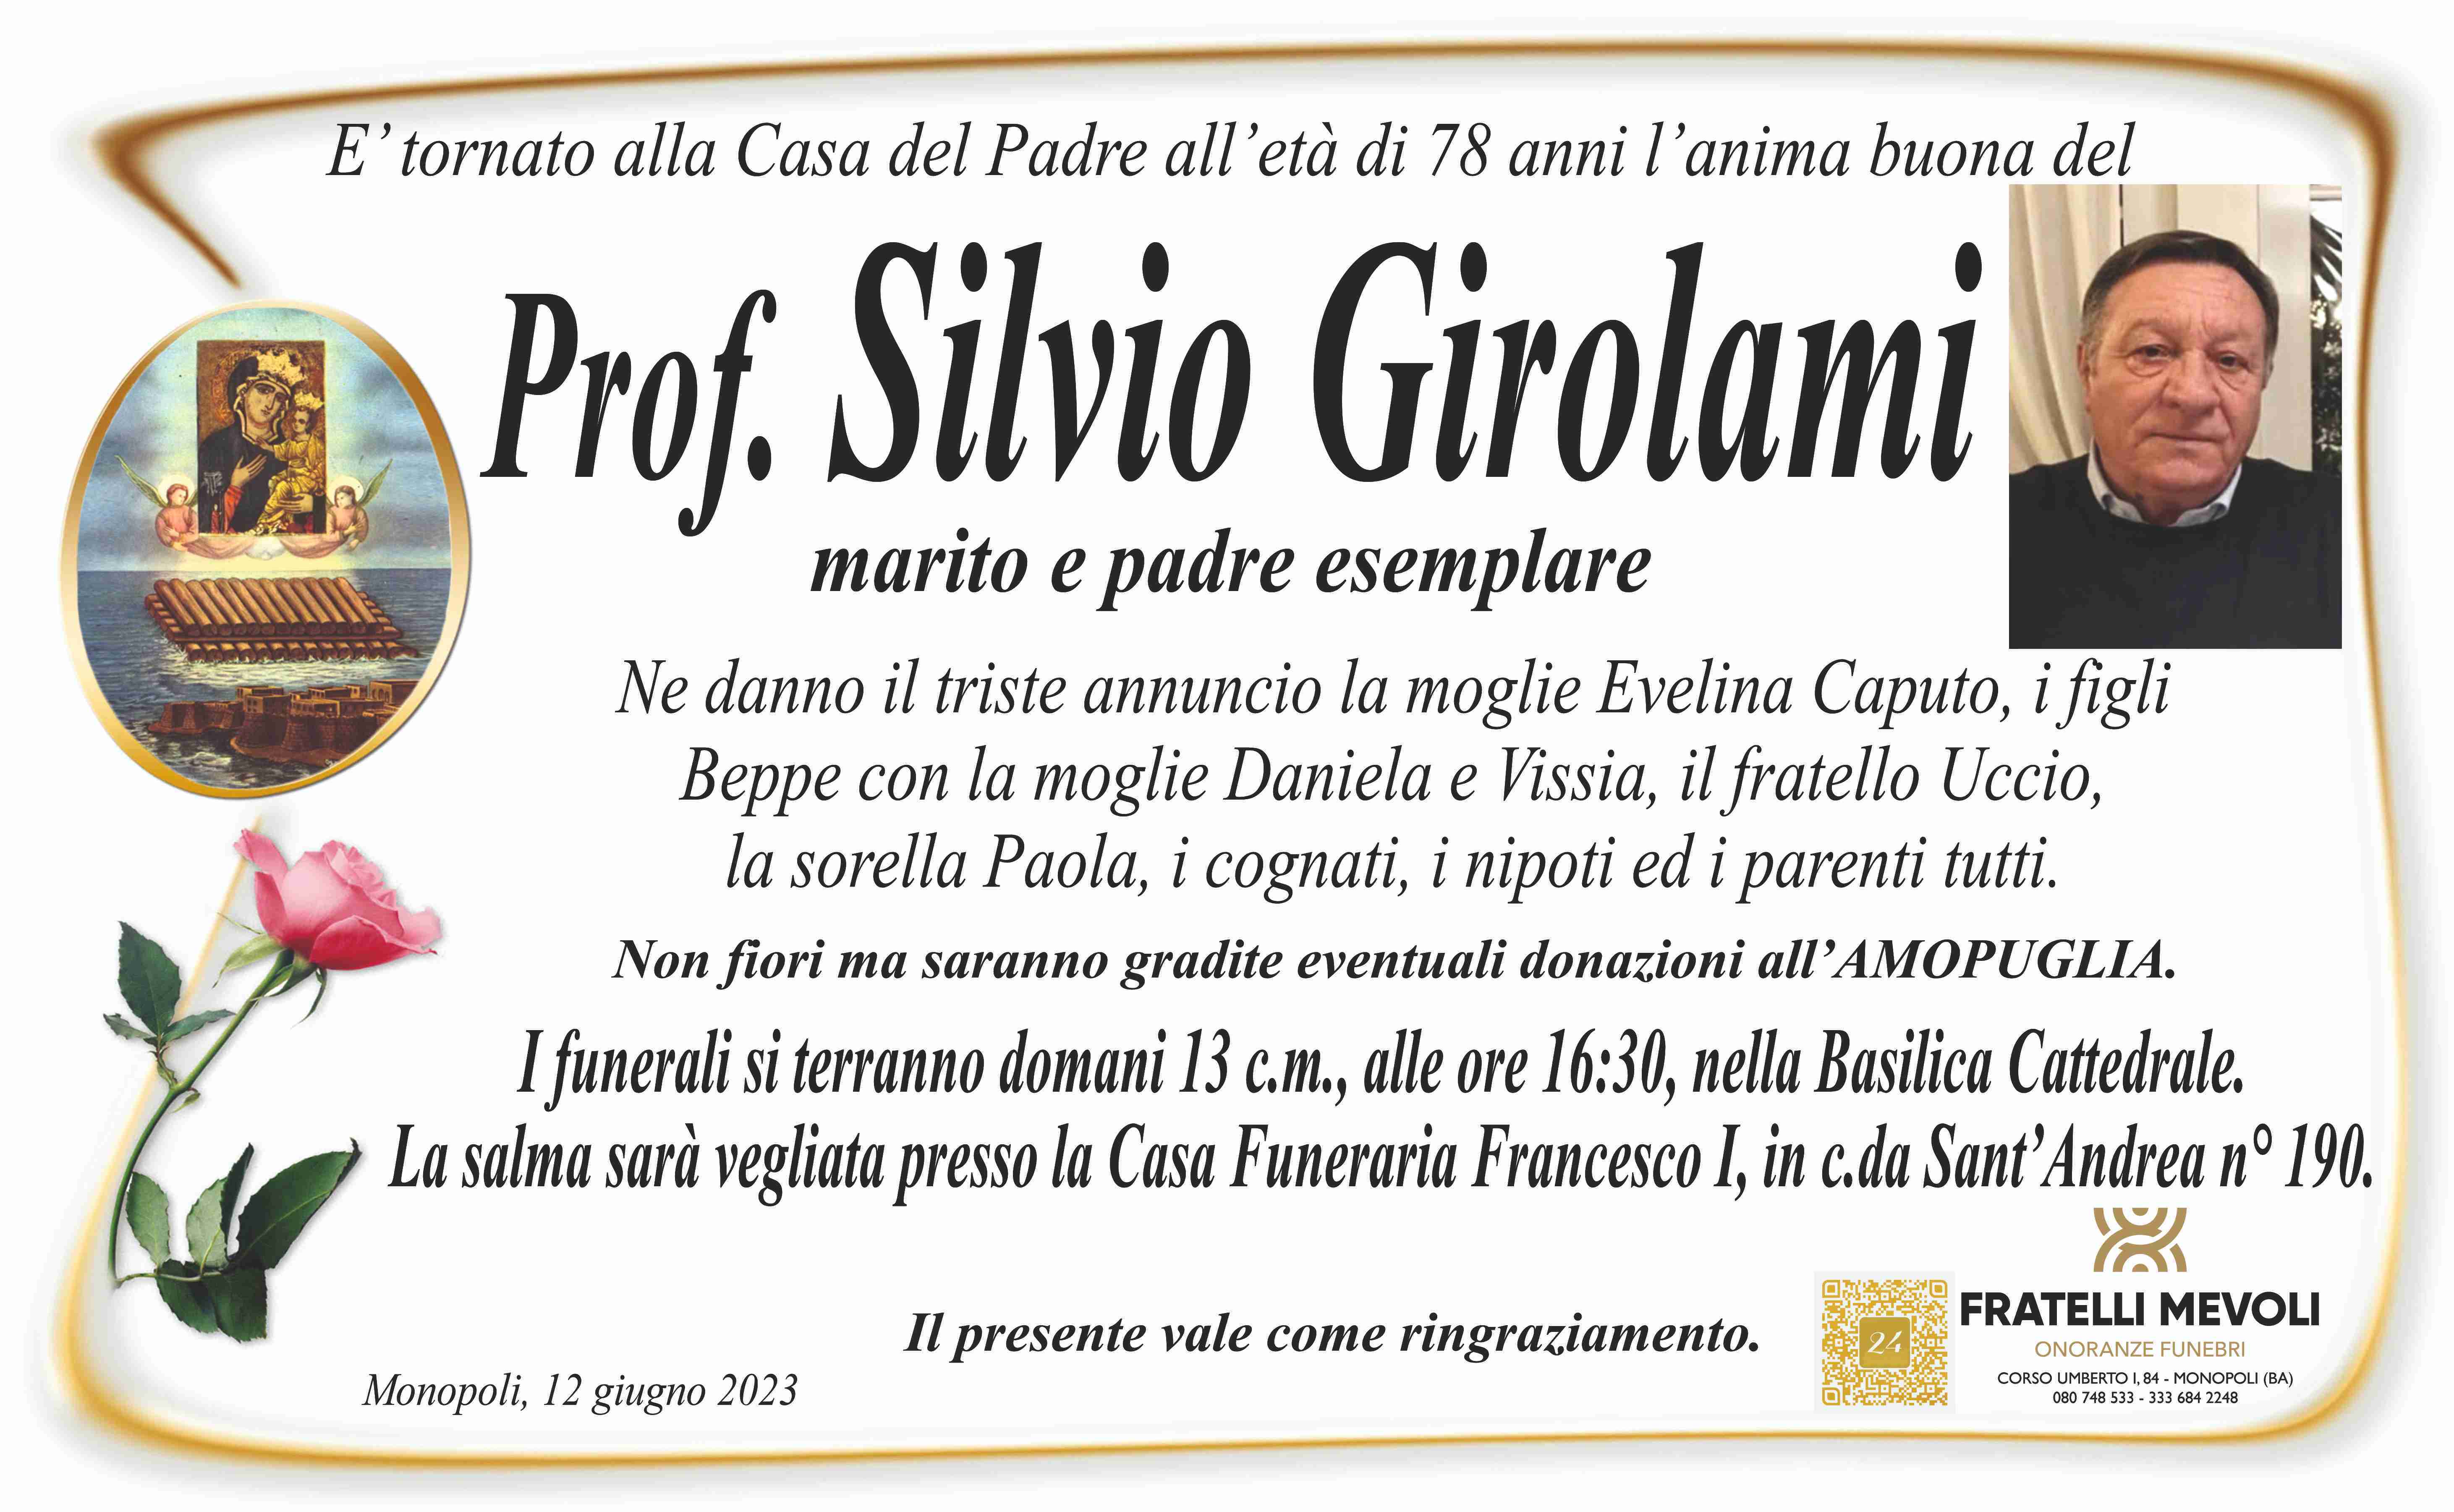 Silvio Girolami